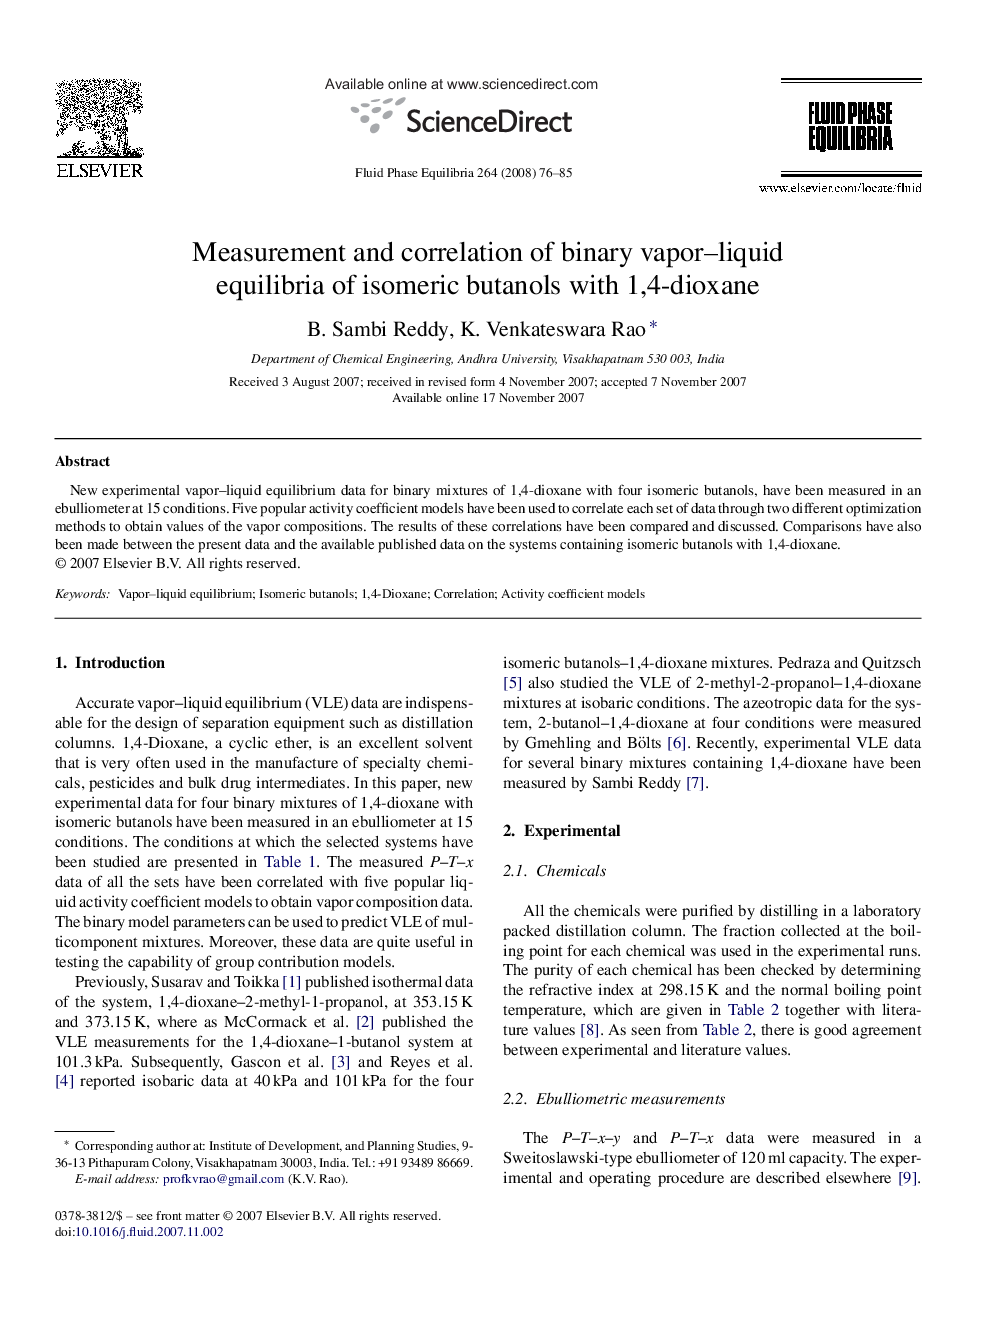 Measurement and correlation of binary vapor–liquid equilibria of isomeric butanols with 1,4-dioxane